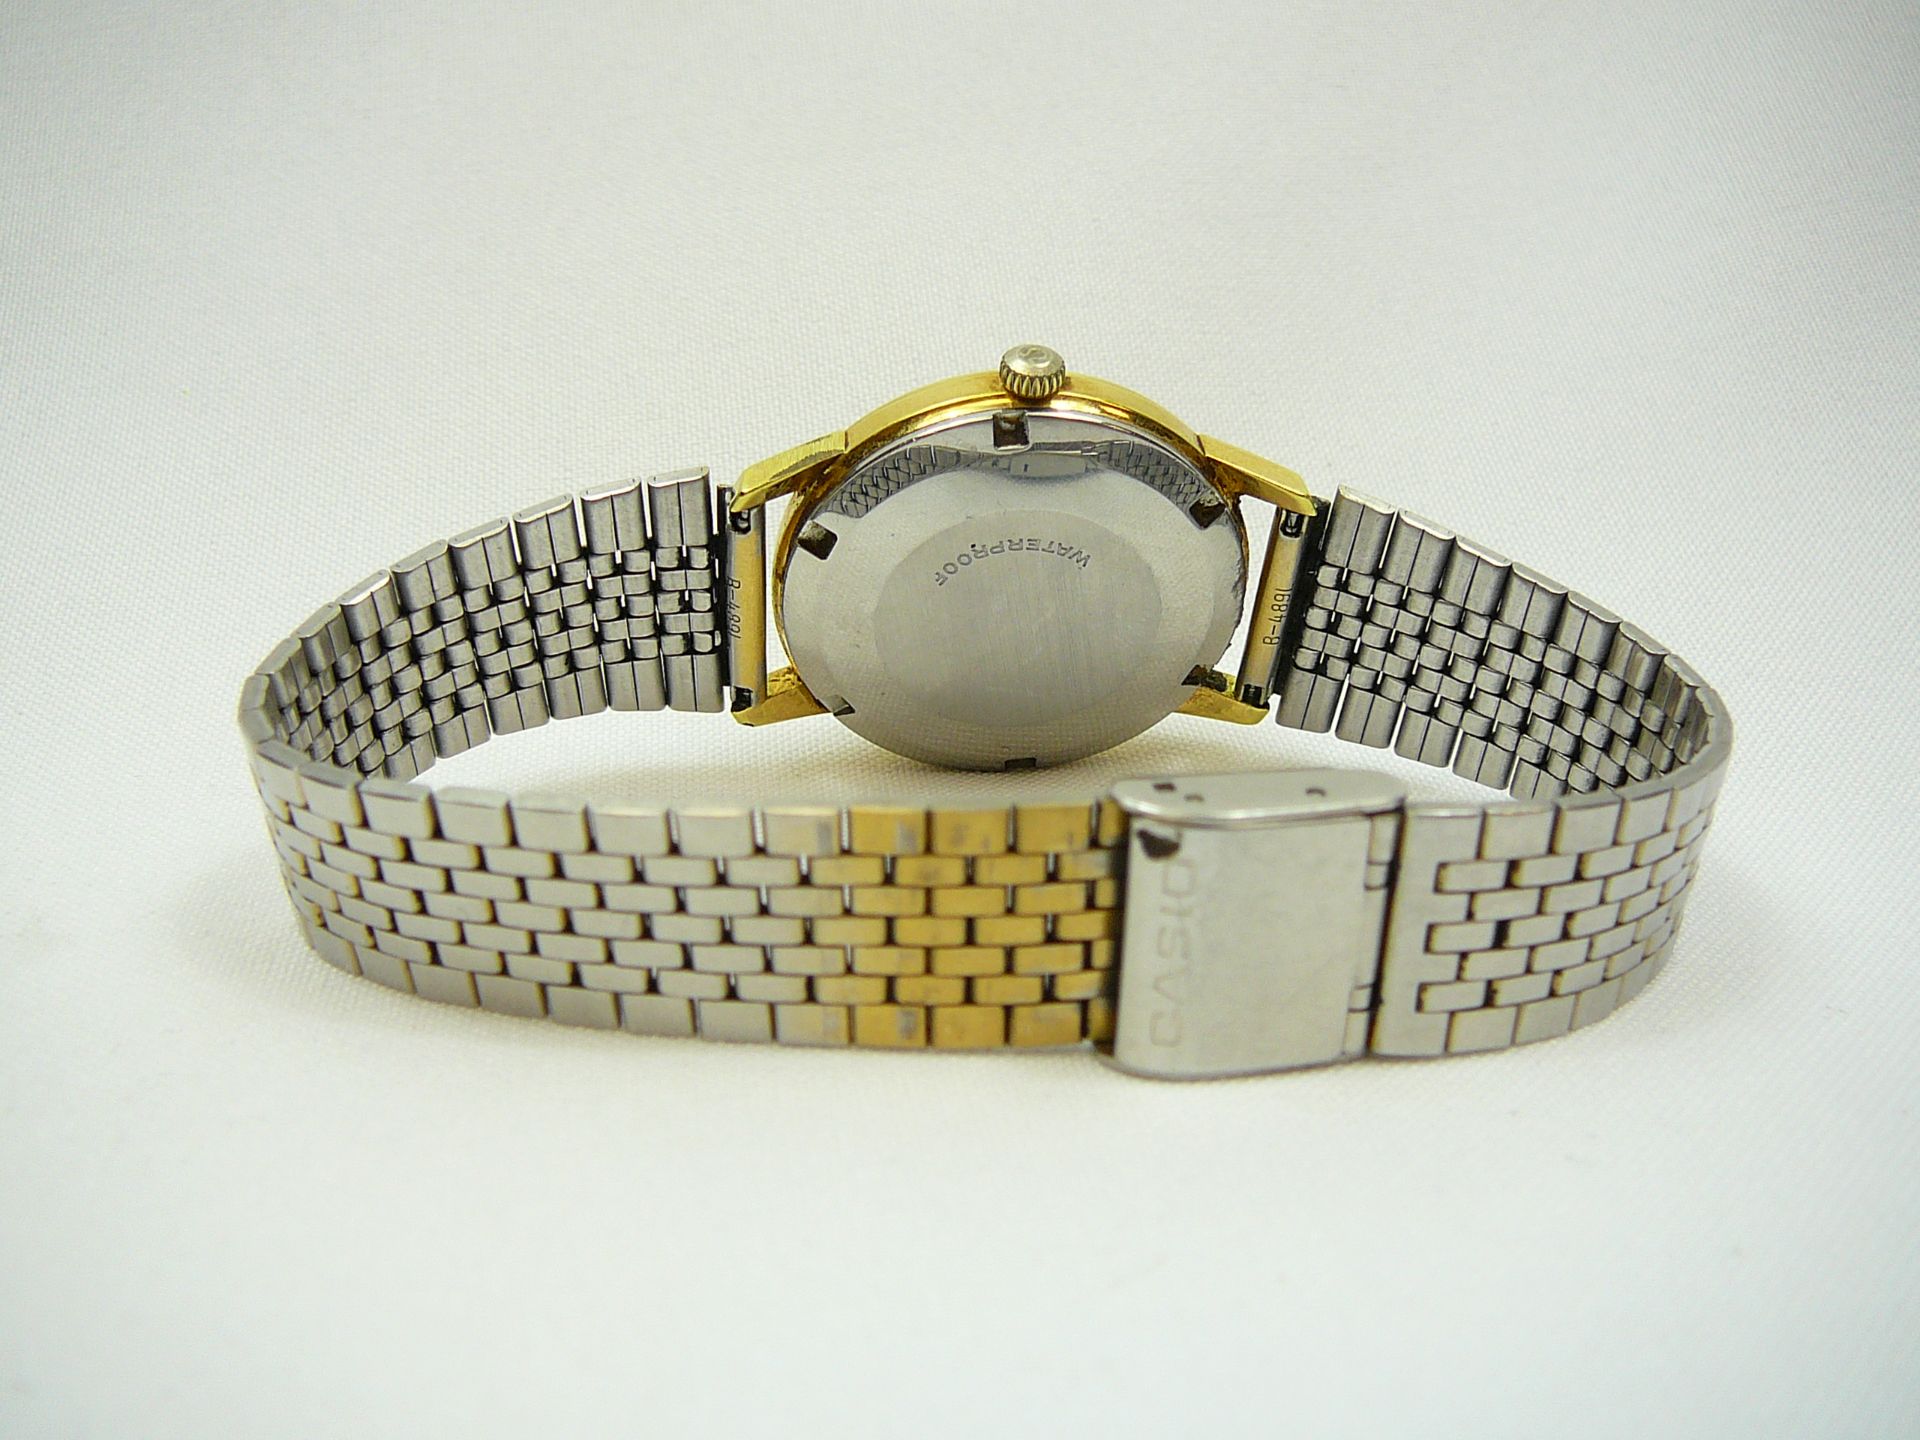 Gents Vintage Omega Wrist Watch - Image 3 of 3